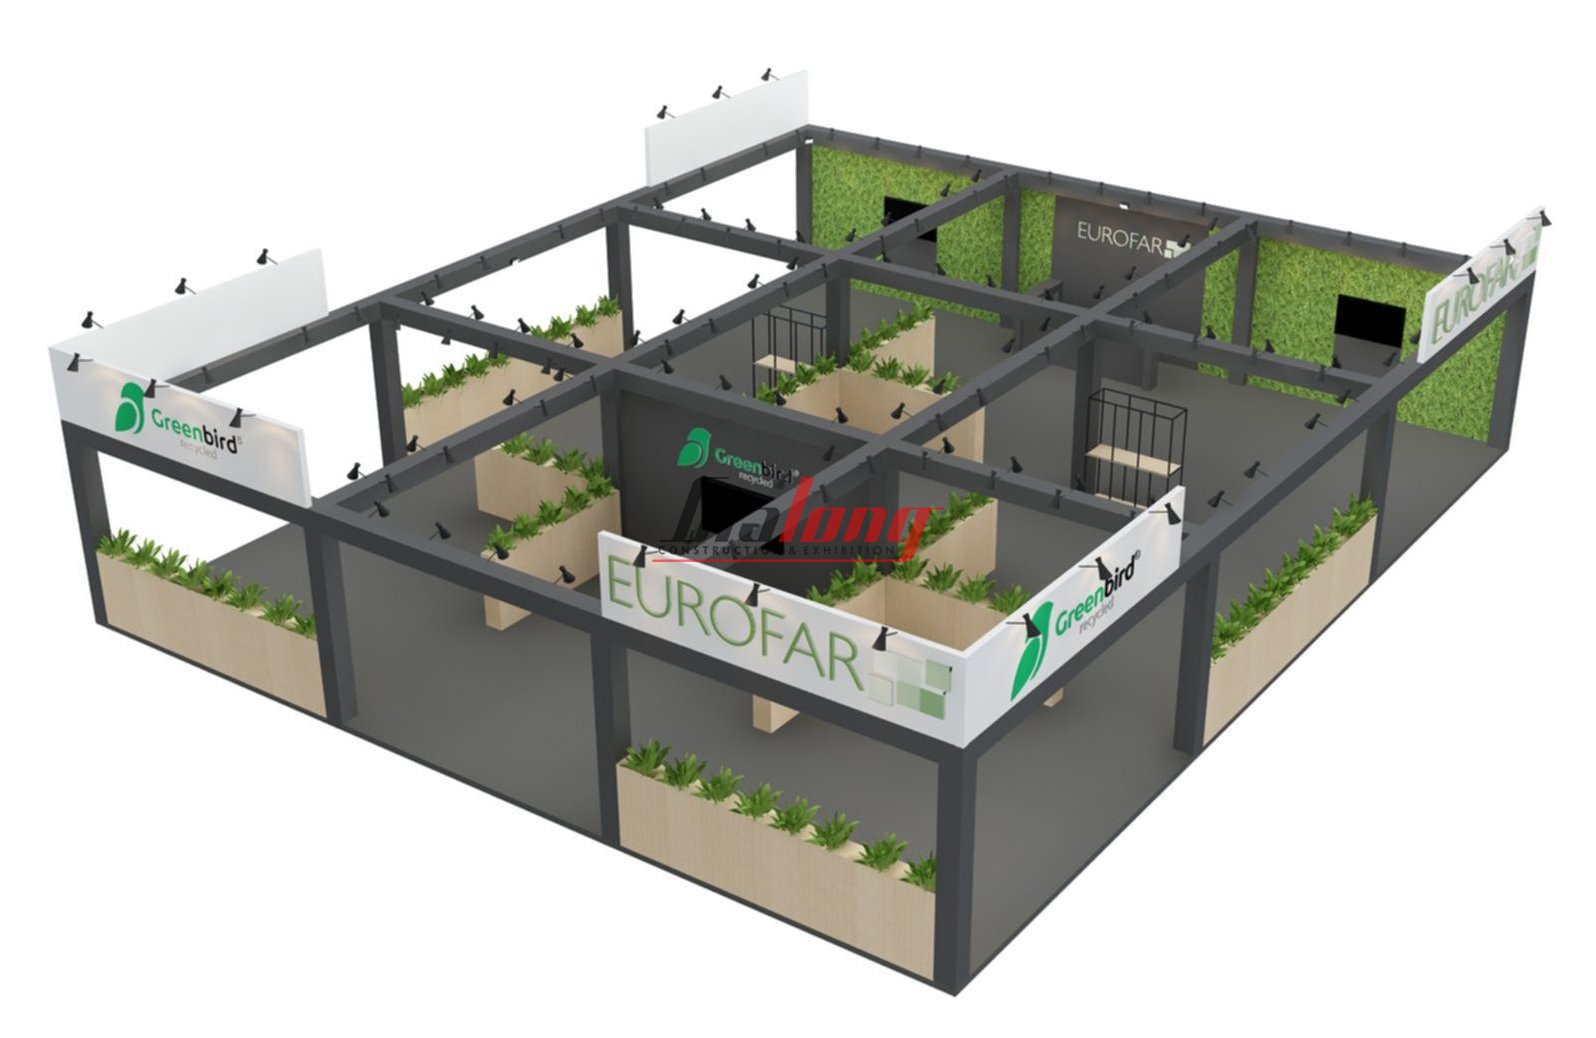 EUROFAR - Thiết kế thi công gian hàng - Design and construction of booth vifa expo